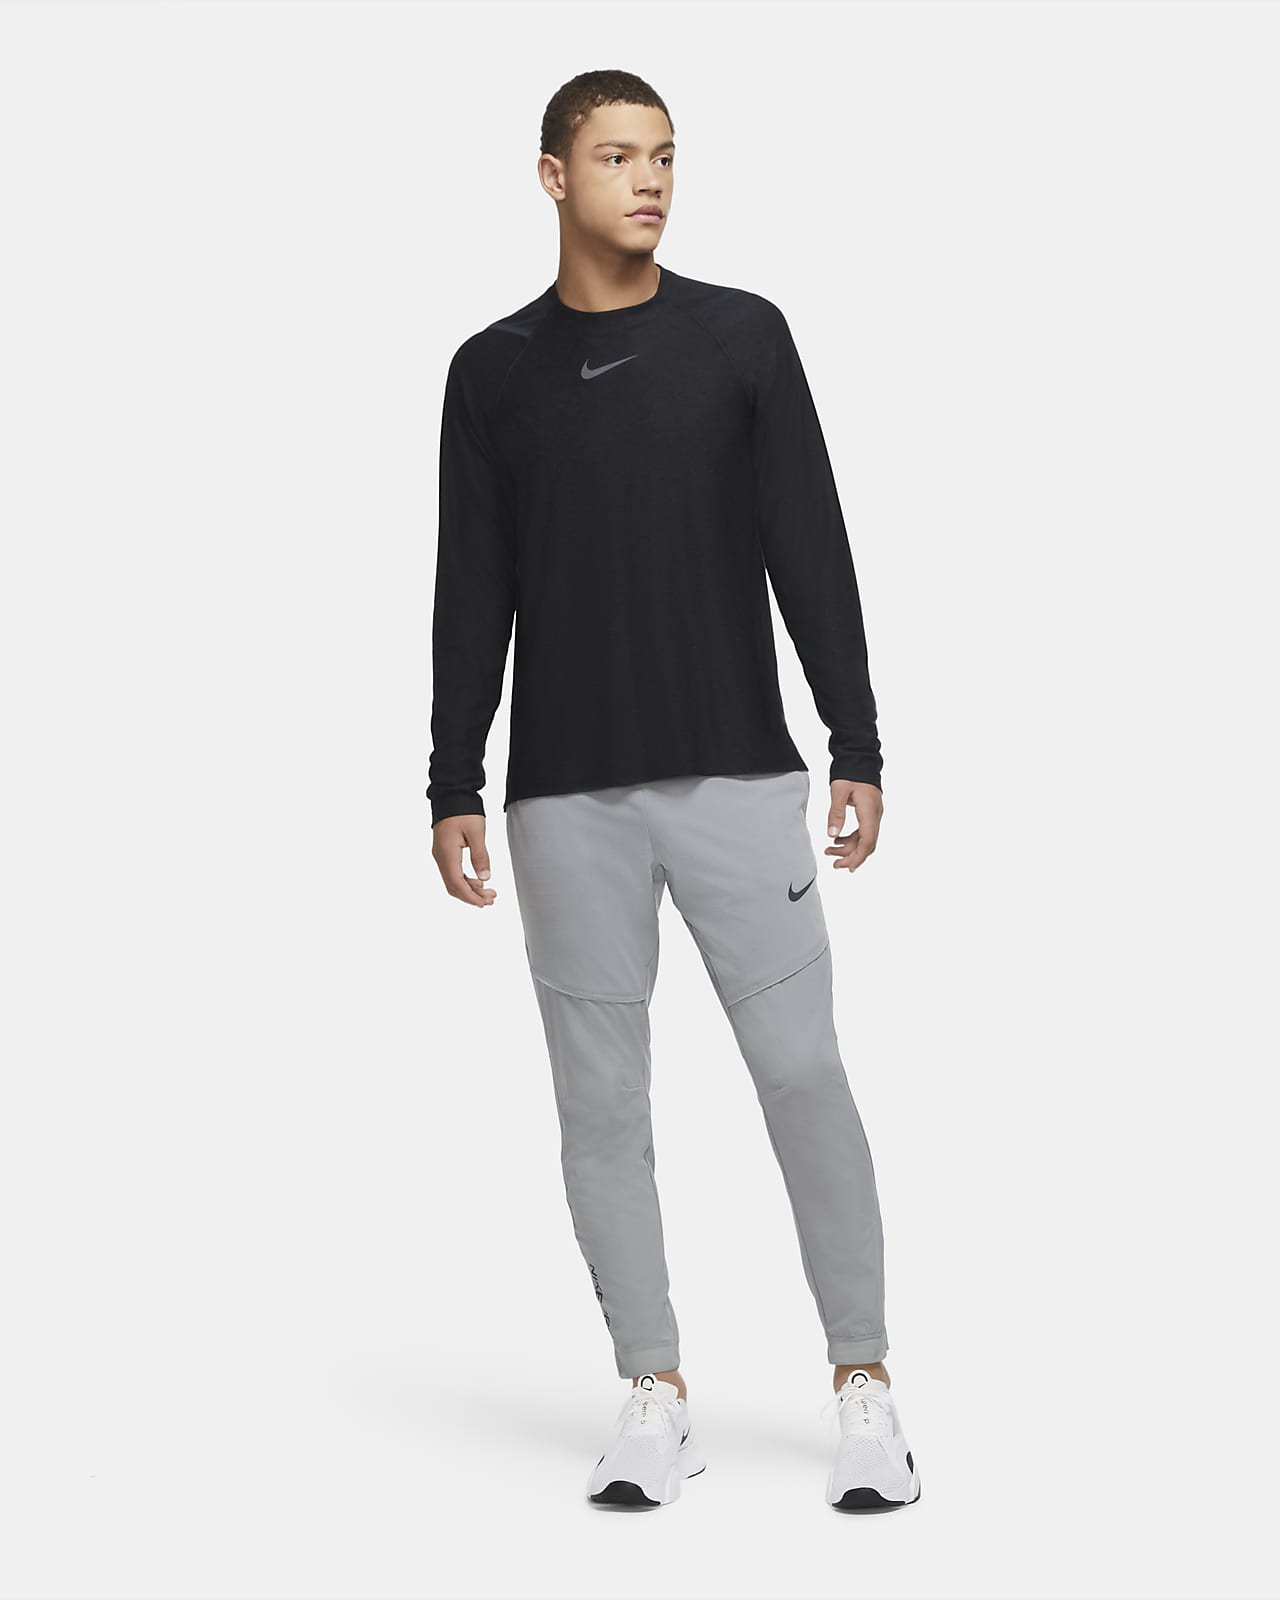 Nike Pro Men's Long-Sleeve Top. Nike.com